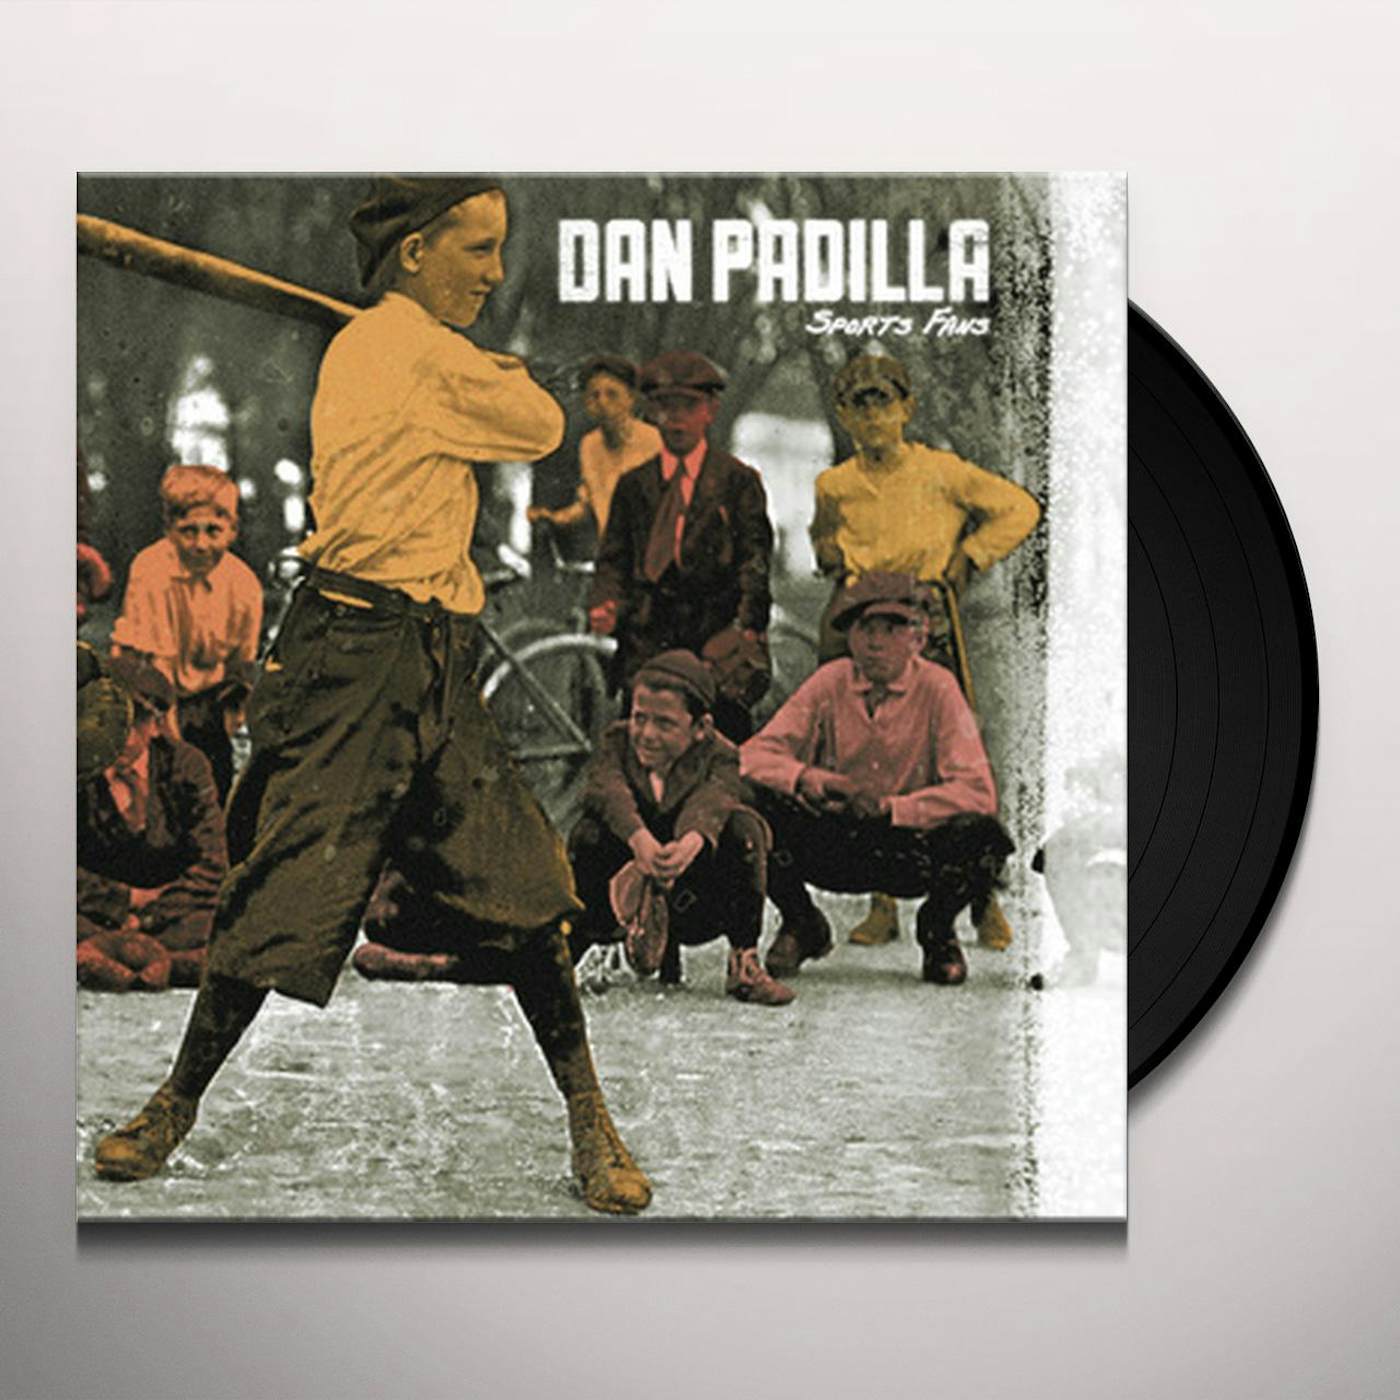 Dan Padilla SPORTS FANS Vinyl Record